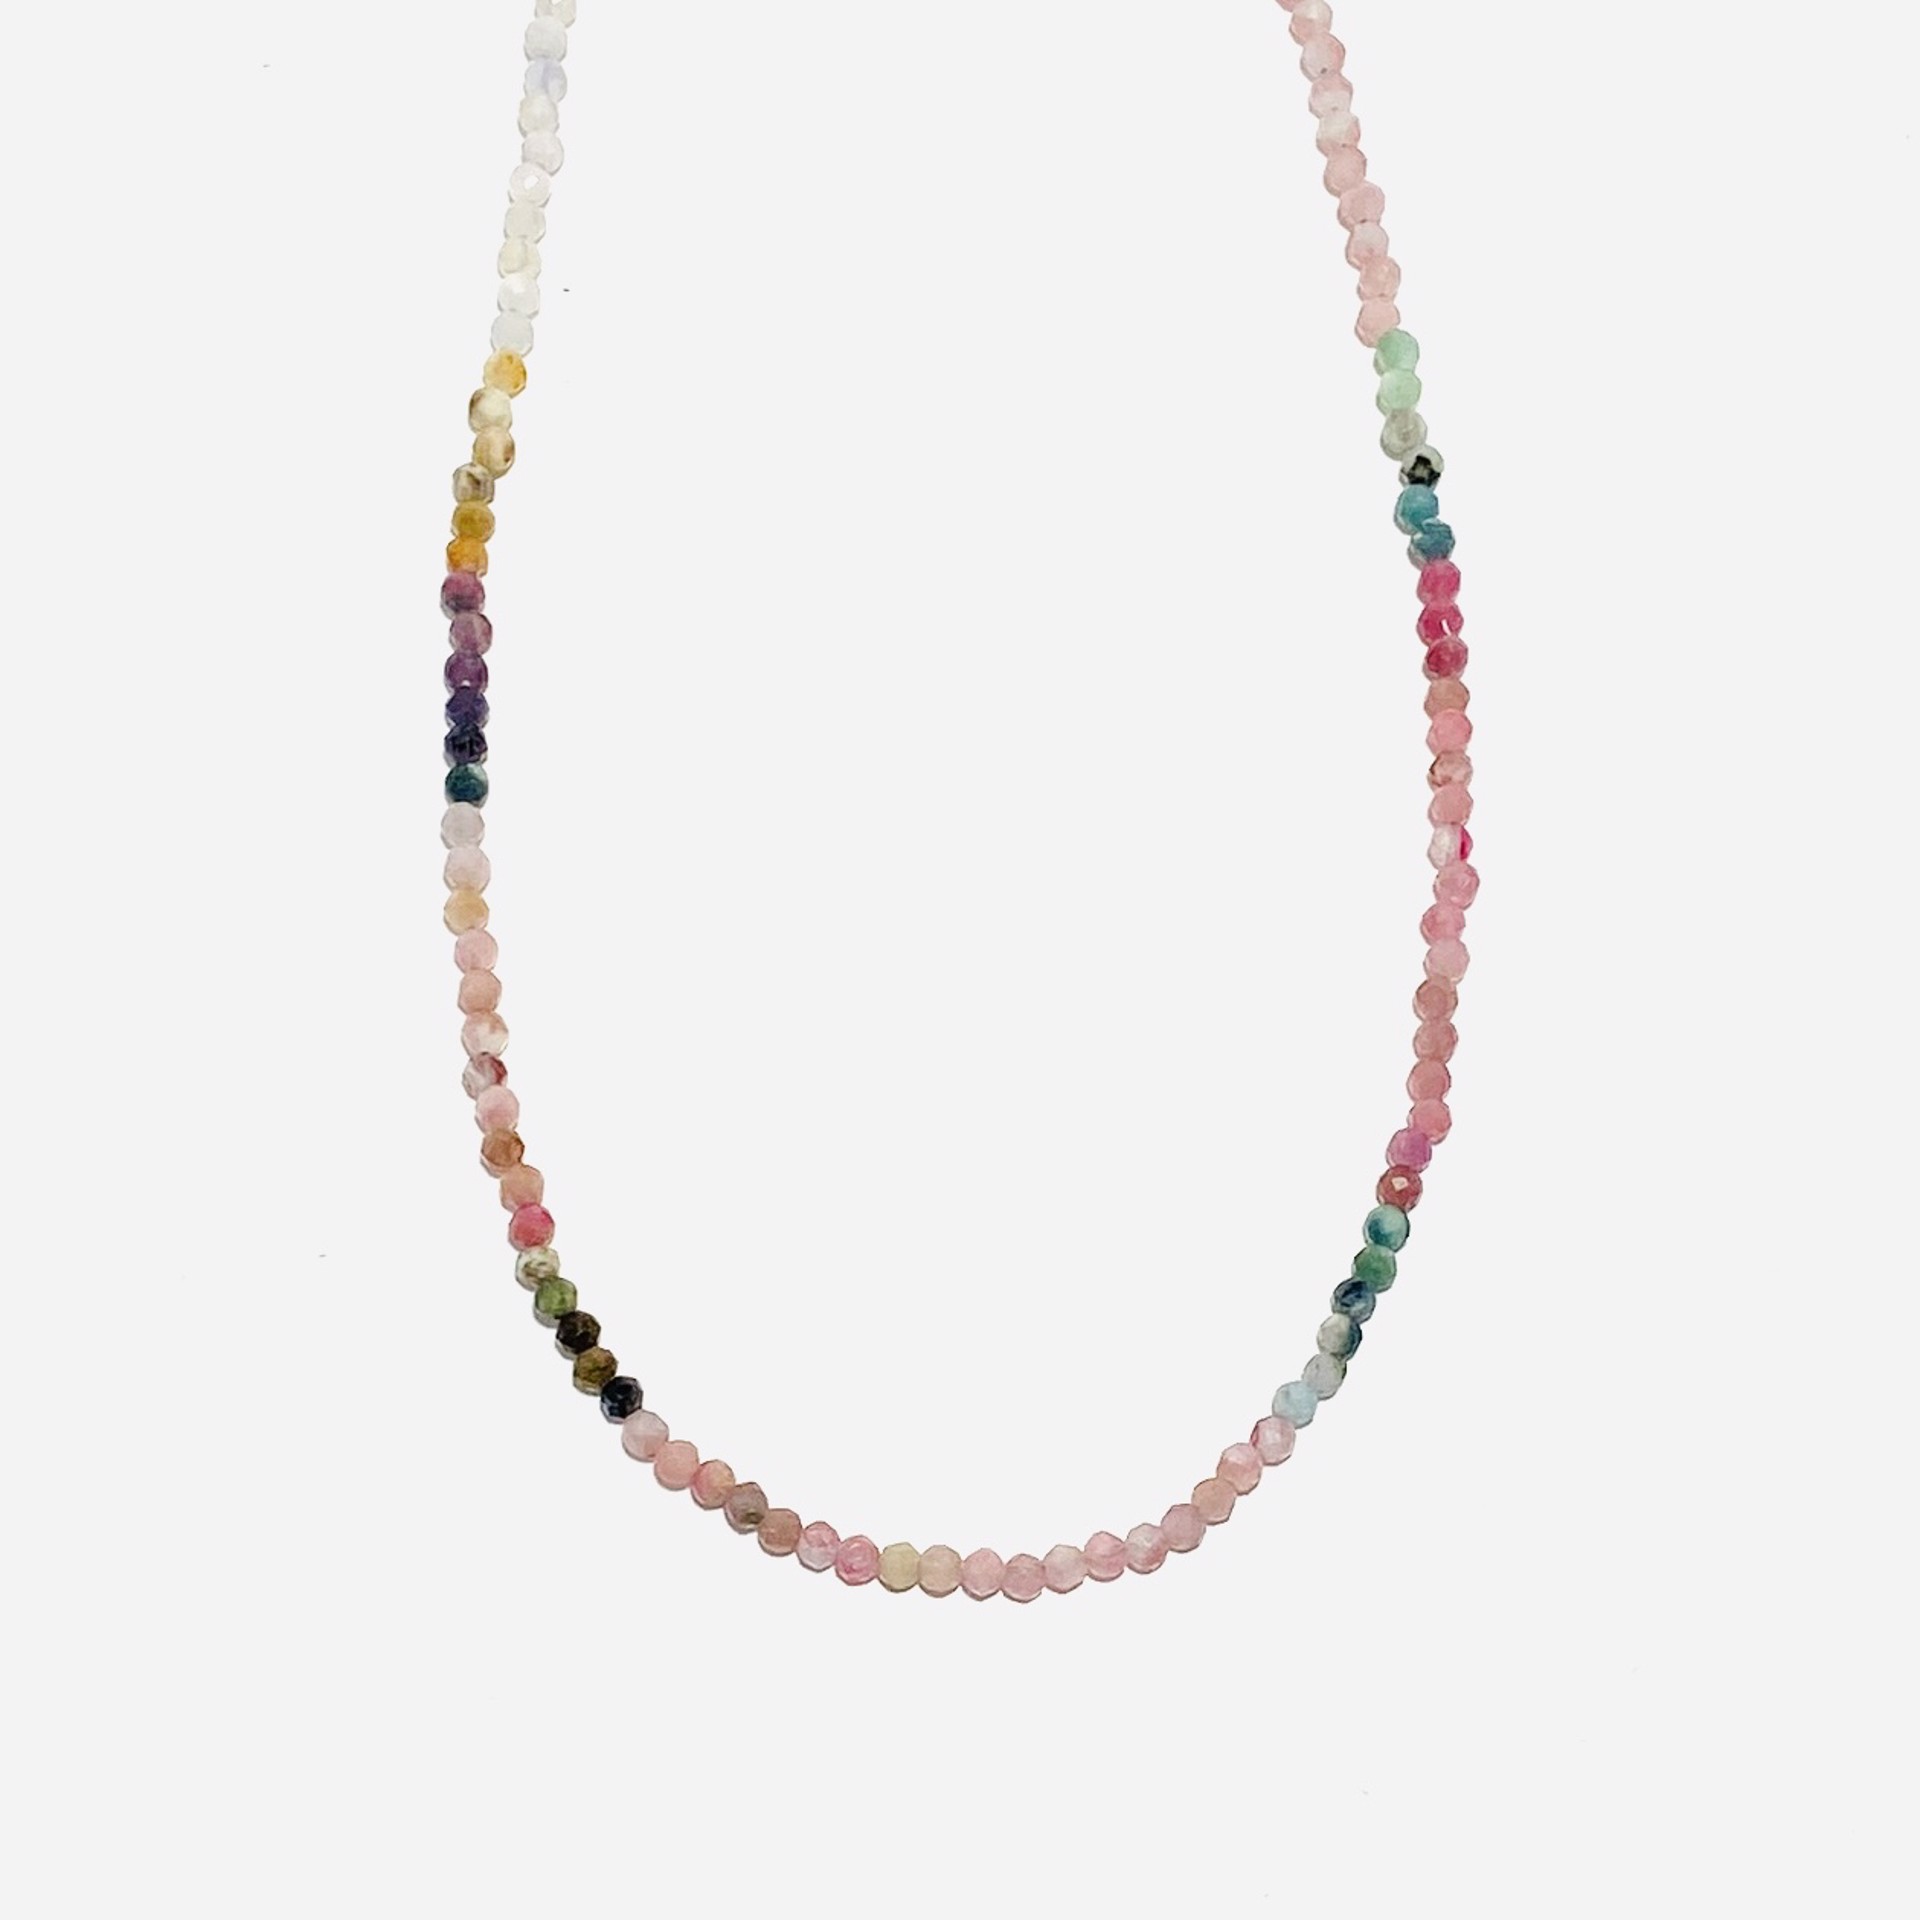 Tiny Muli-colored Tourmaline Necklace by Nance Trueworthy